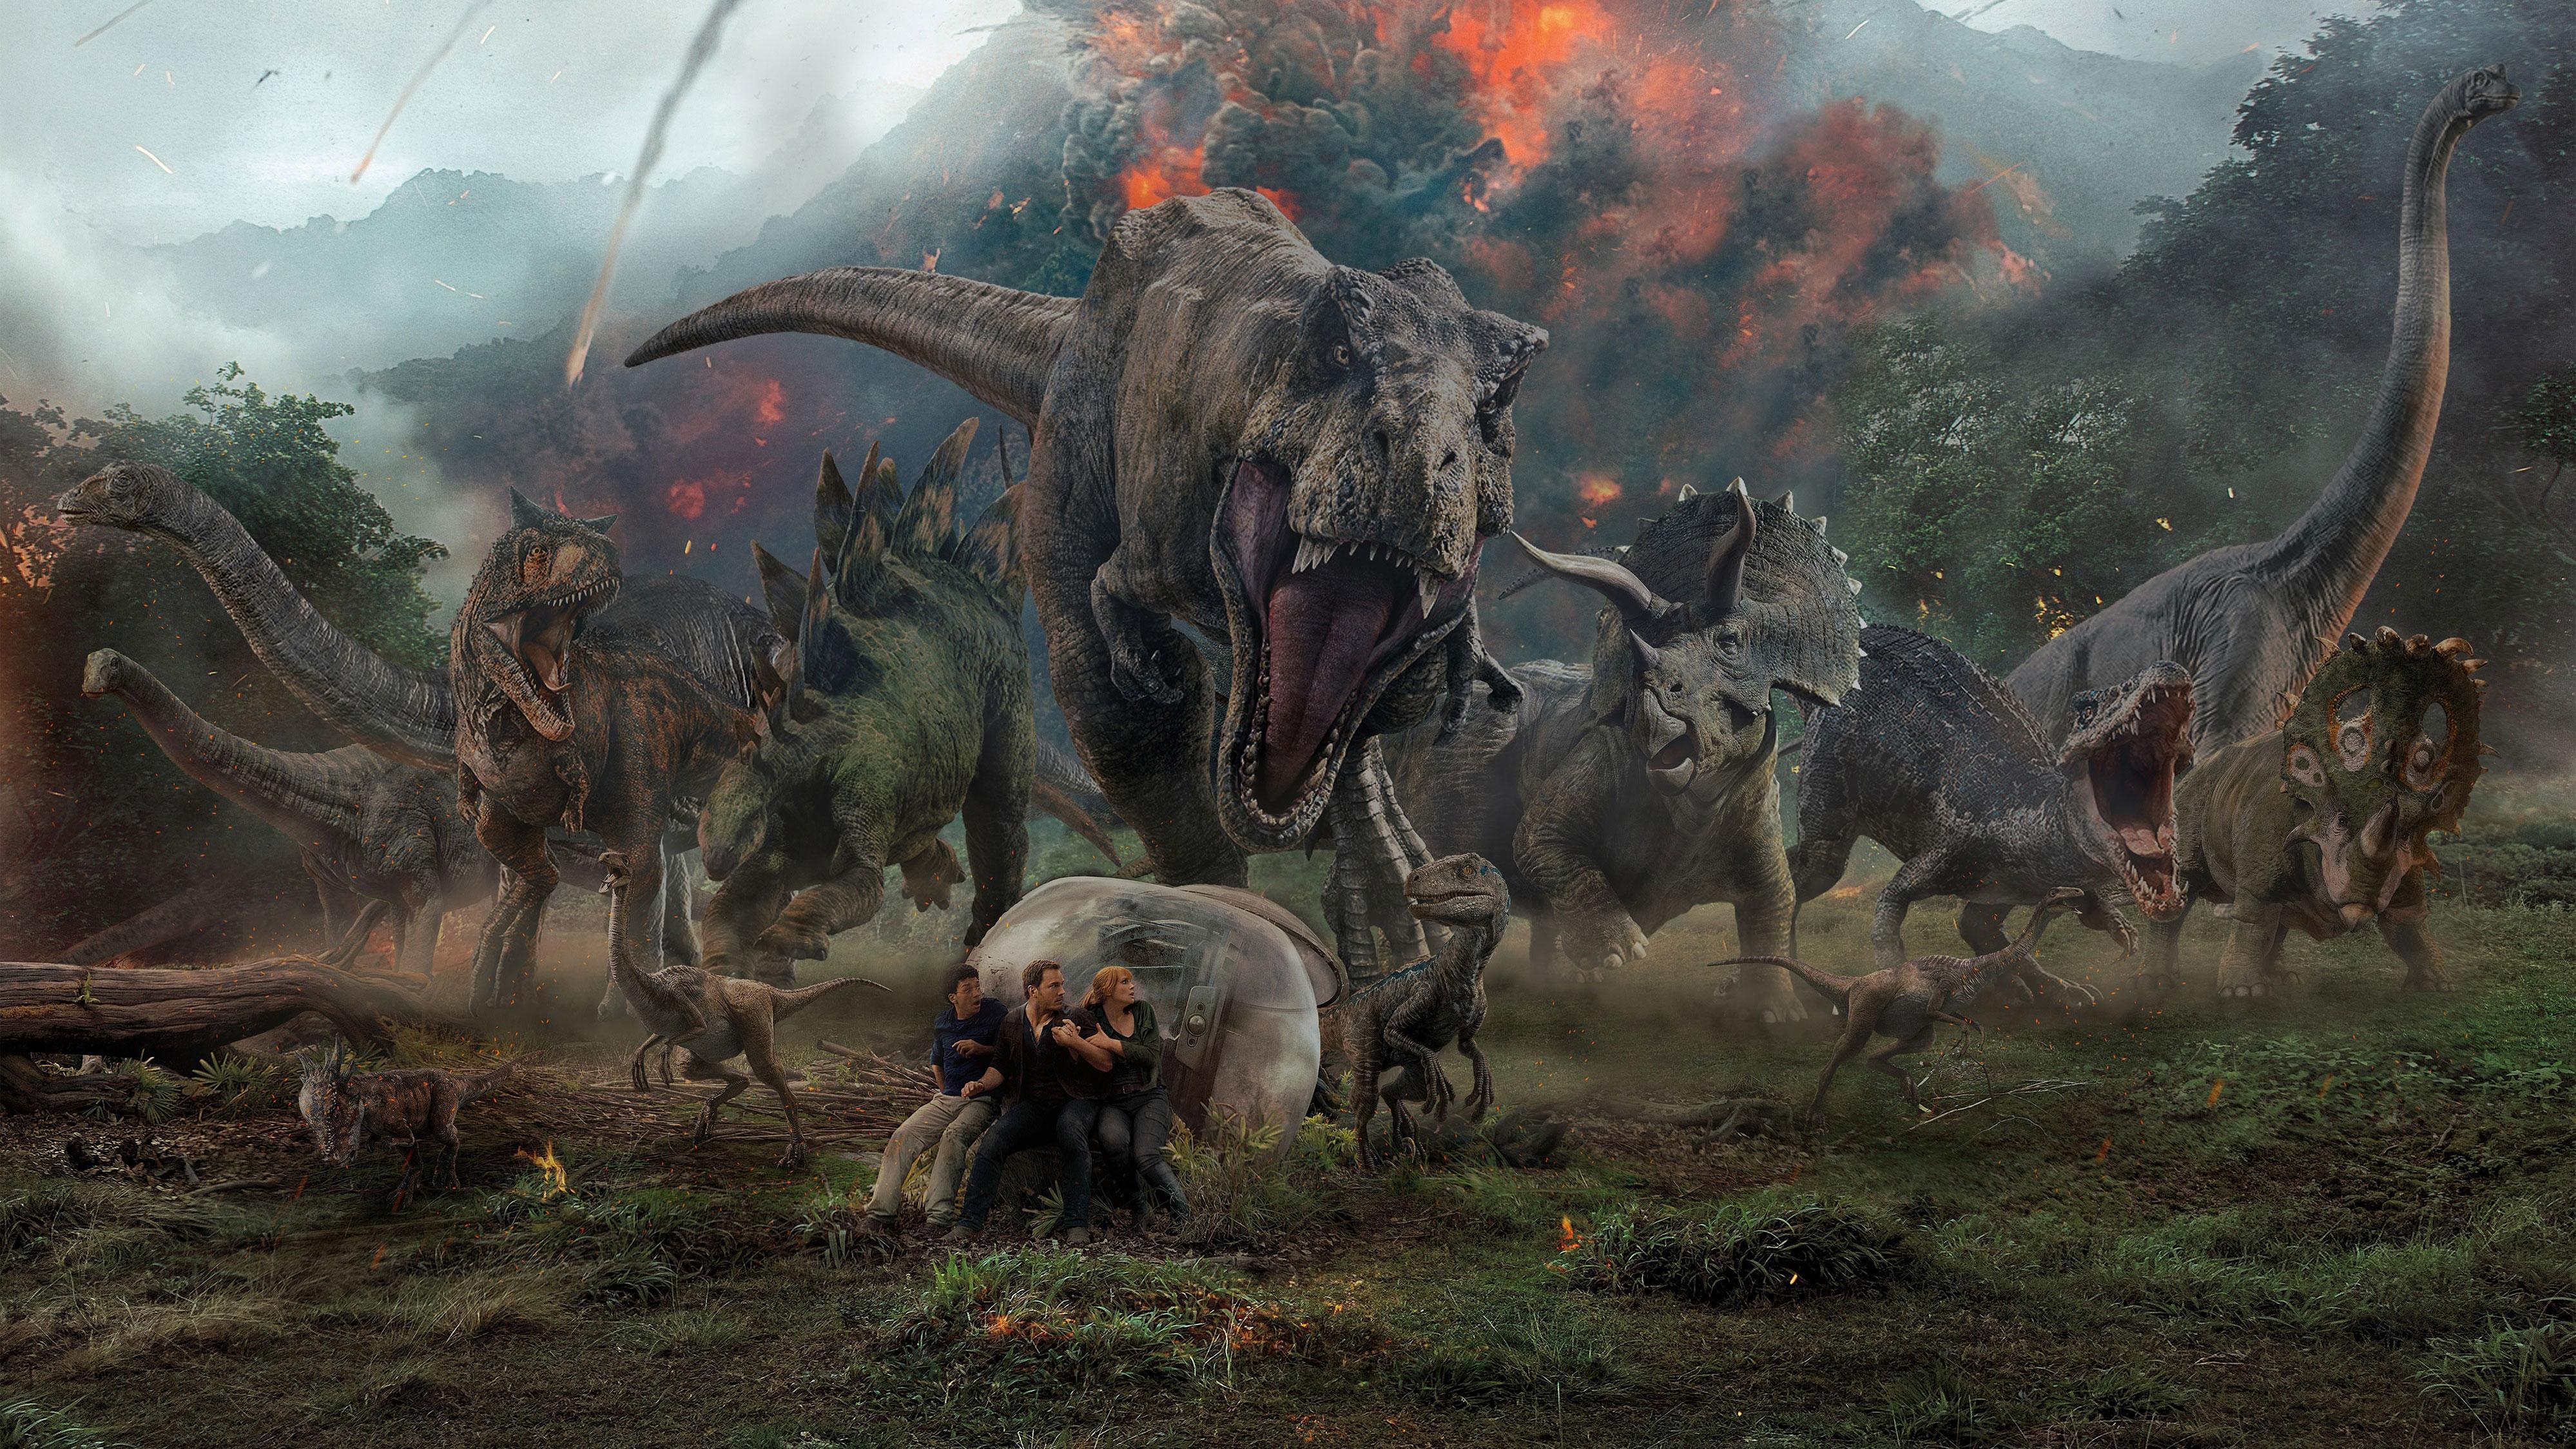 Jurassic Park 4K Wallpapers - Top Free Jurassic Park 4K Backgrounds